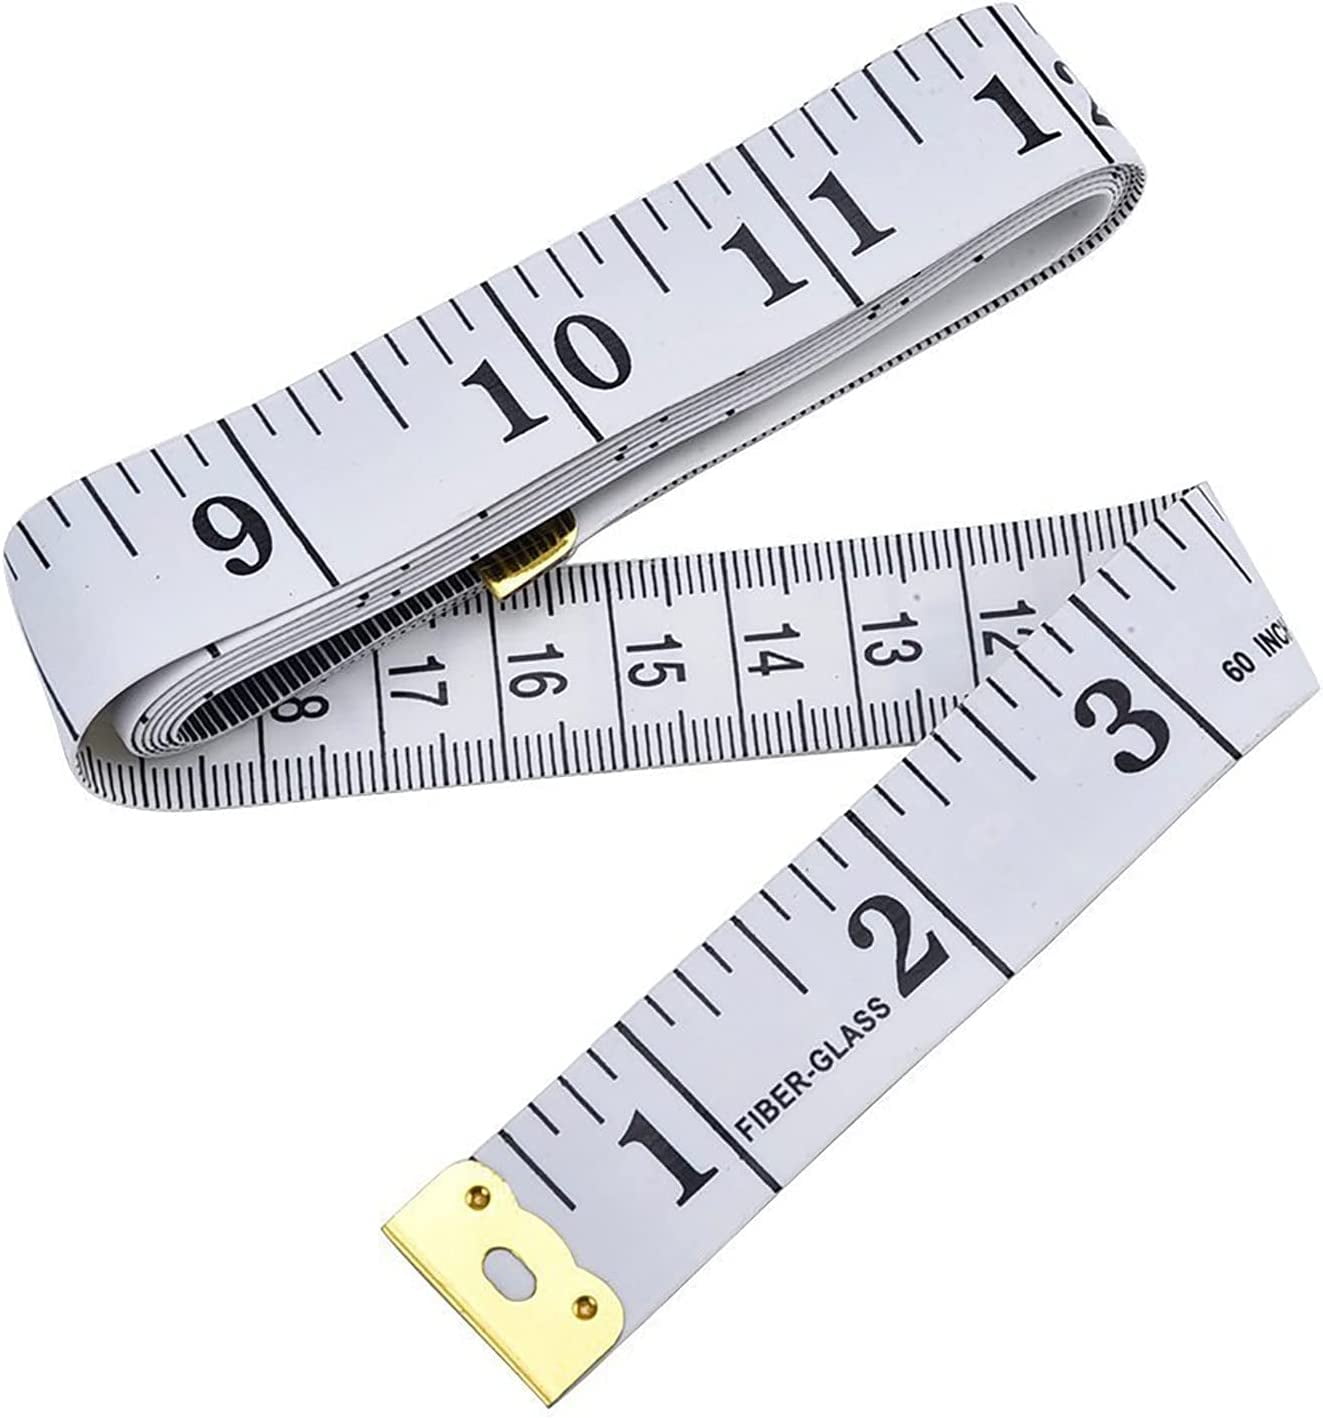 Body Measuring Tape Sewing Flexible Tape Body Meter Measure 150cm Metric- Tapes Tools Measure Ruler Measuring Instruments - AliExpress